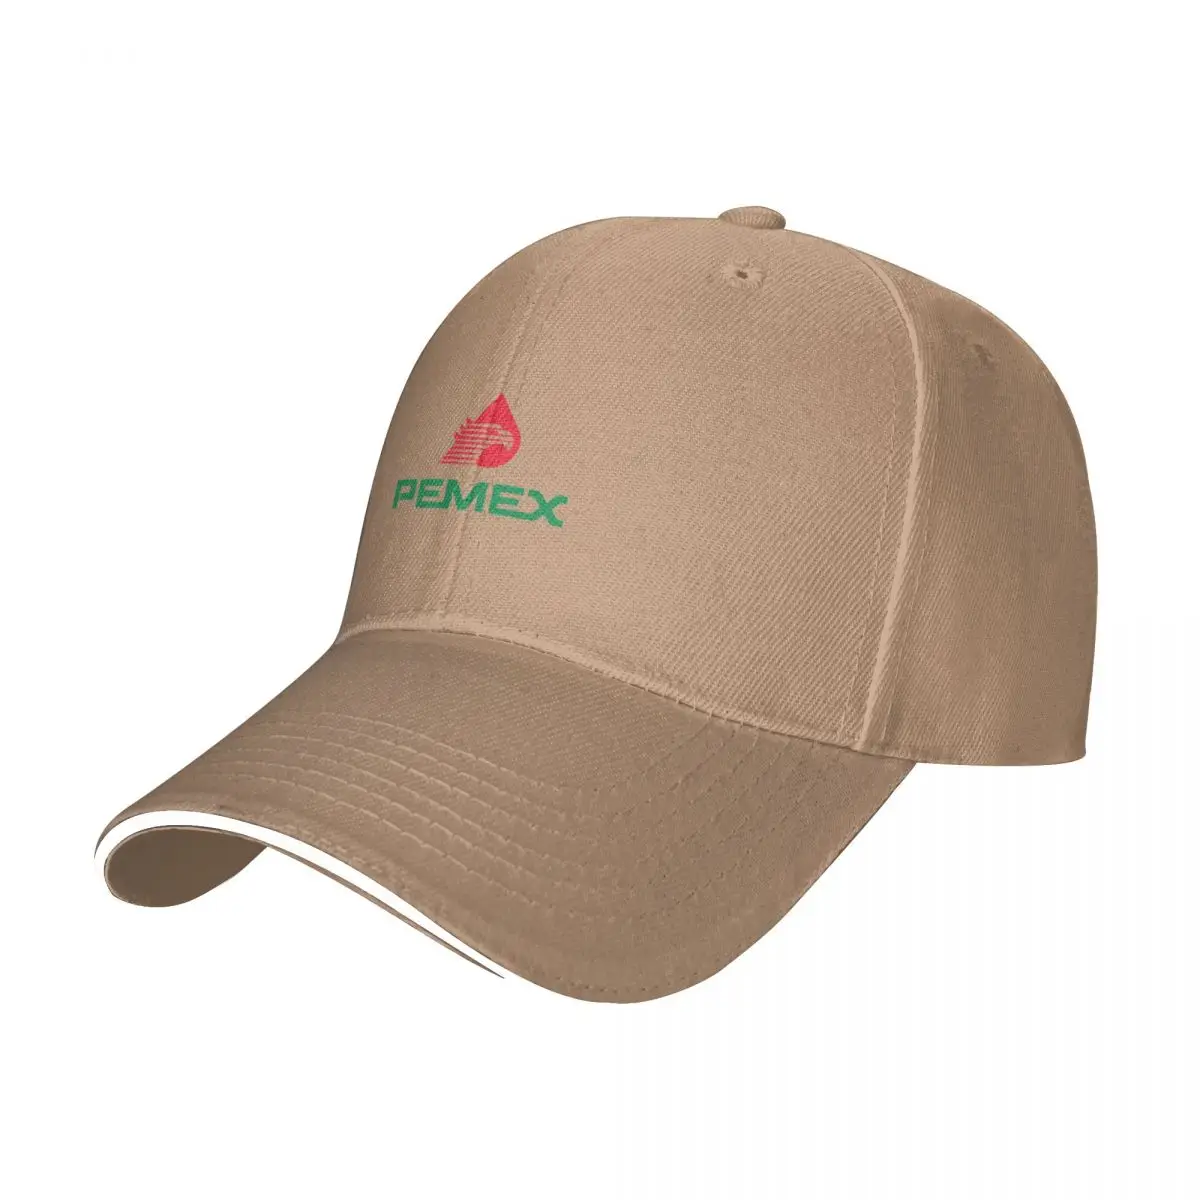 Trucker Hats Hat, Baseball Cap, Fishing Caps